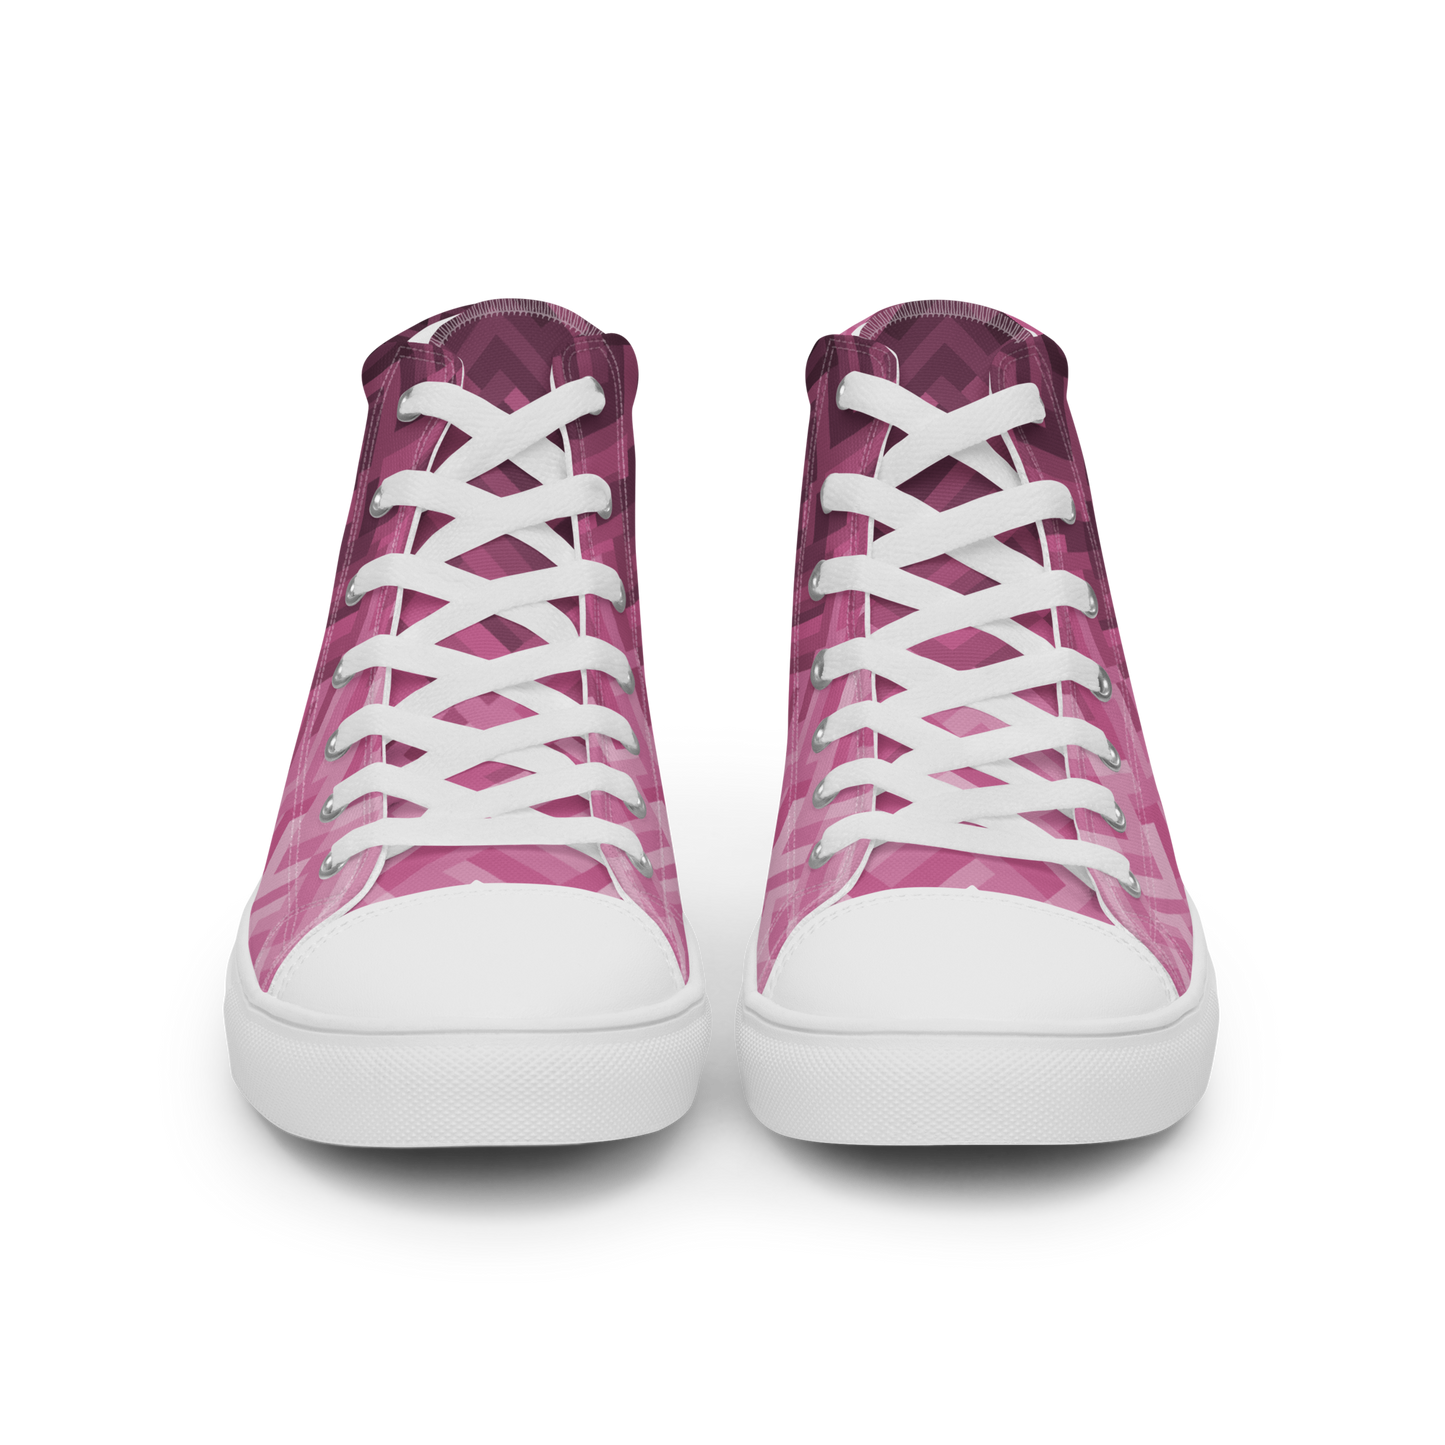 Men's Canvas Sneakers ❯ Polygonal Gradient ❯ Orchid Pink